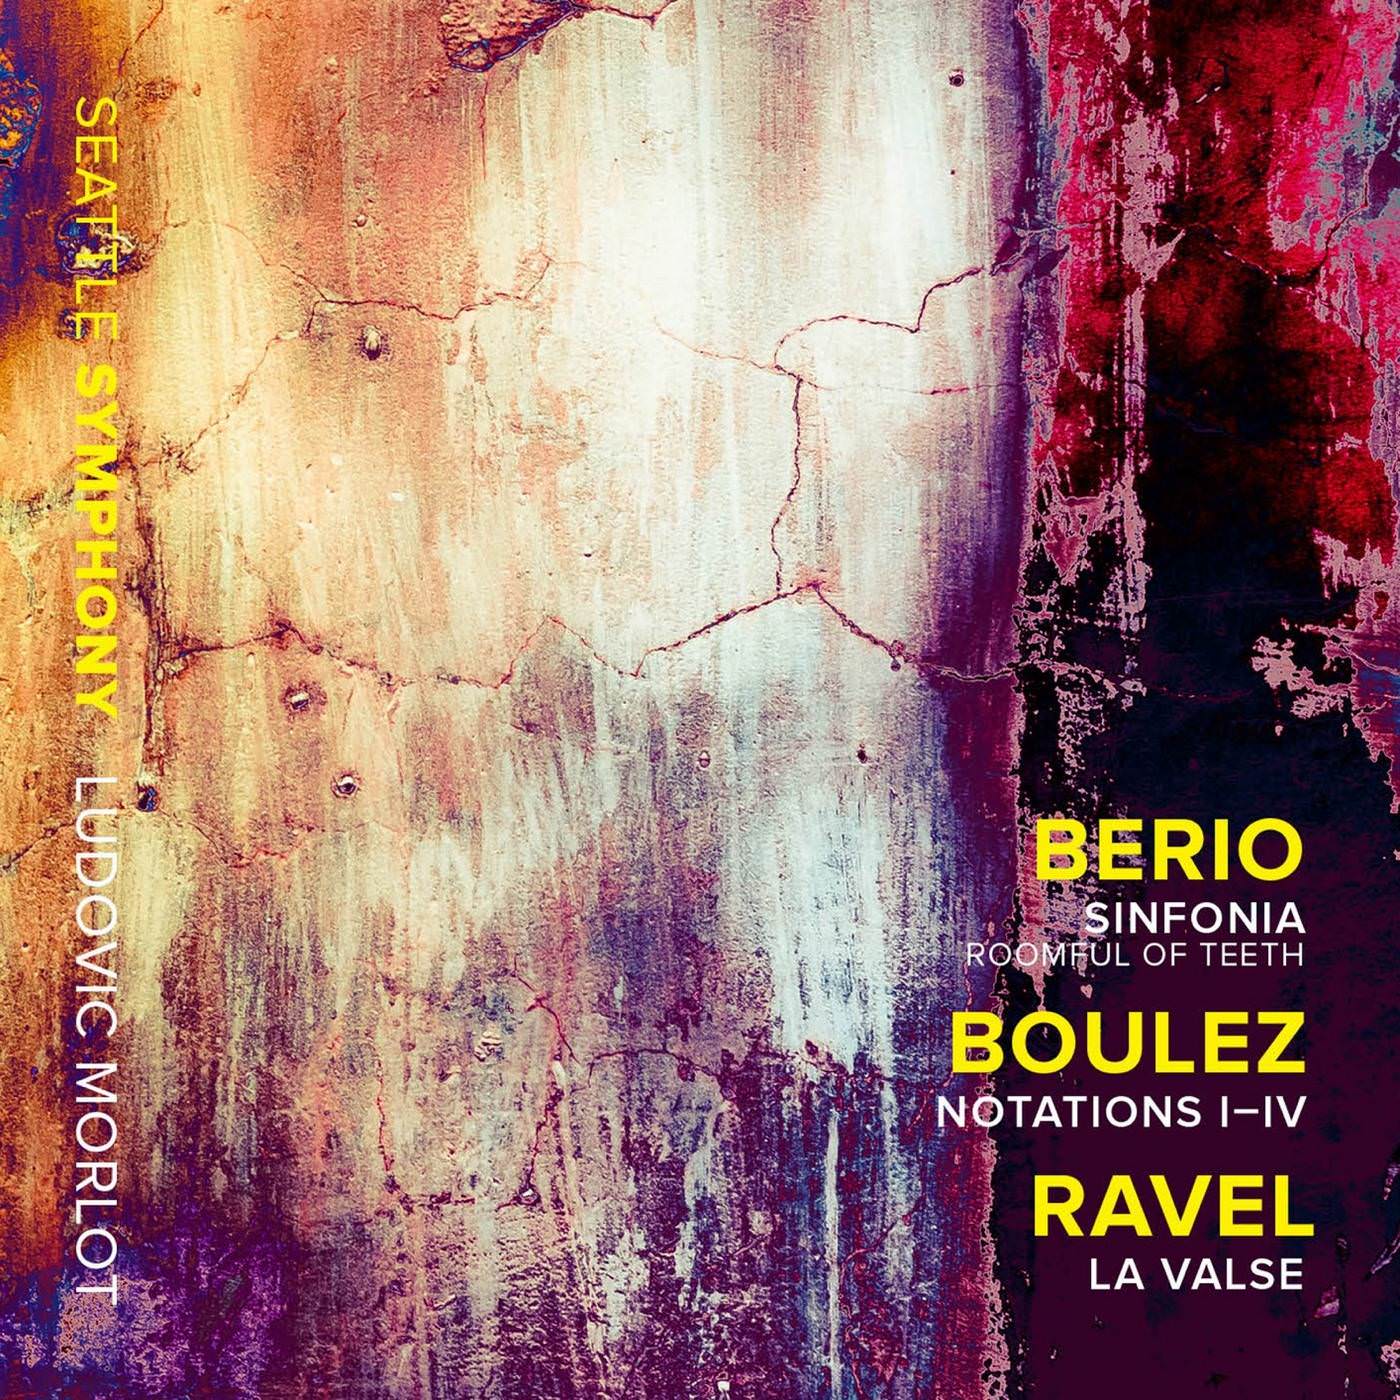 Seattle Symphony Orchestra, Ludovic Morlot - Berio: Sinfonia; Boulez: Notations I-IV; Ravel: La valse, M. 72 (2018) [FLAC 24bit/96kHz]